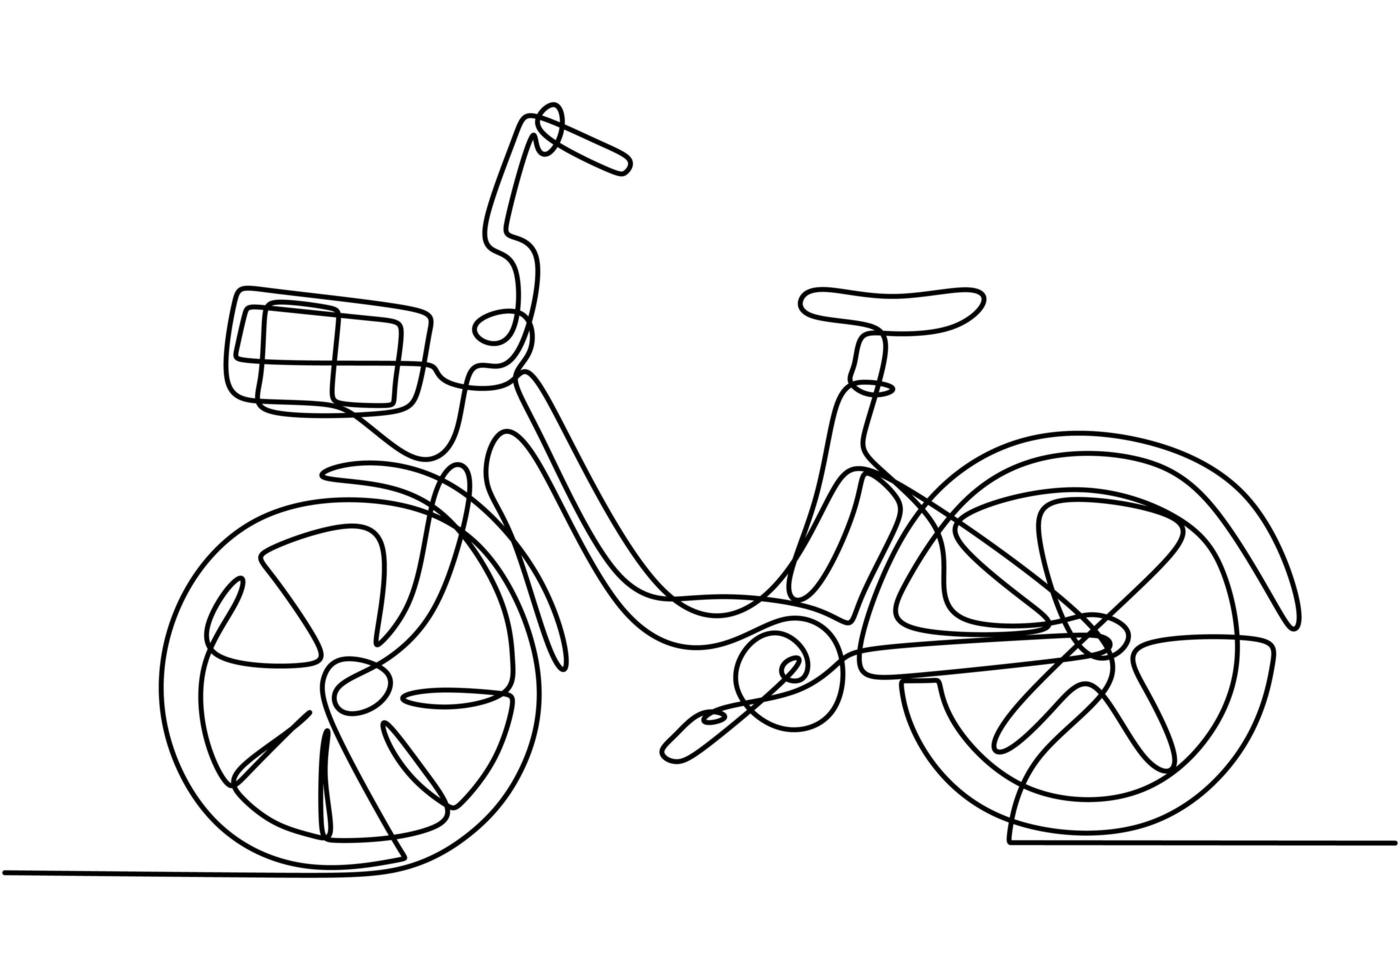 en linje ritning eller kontinuerlig linje konst av cykel vektorillustration. vektor